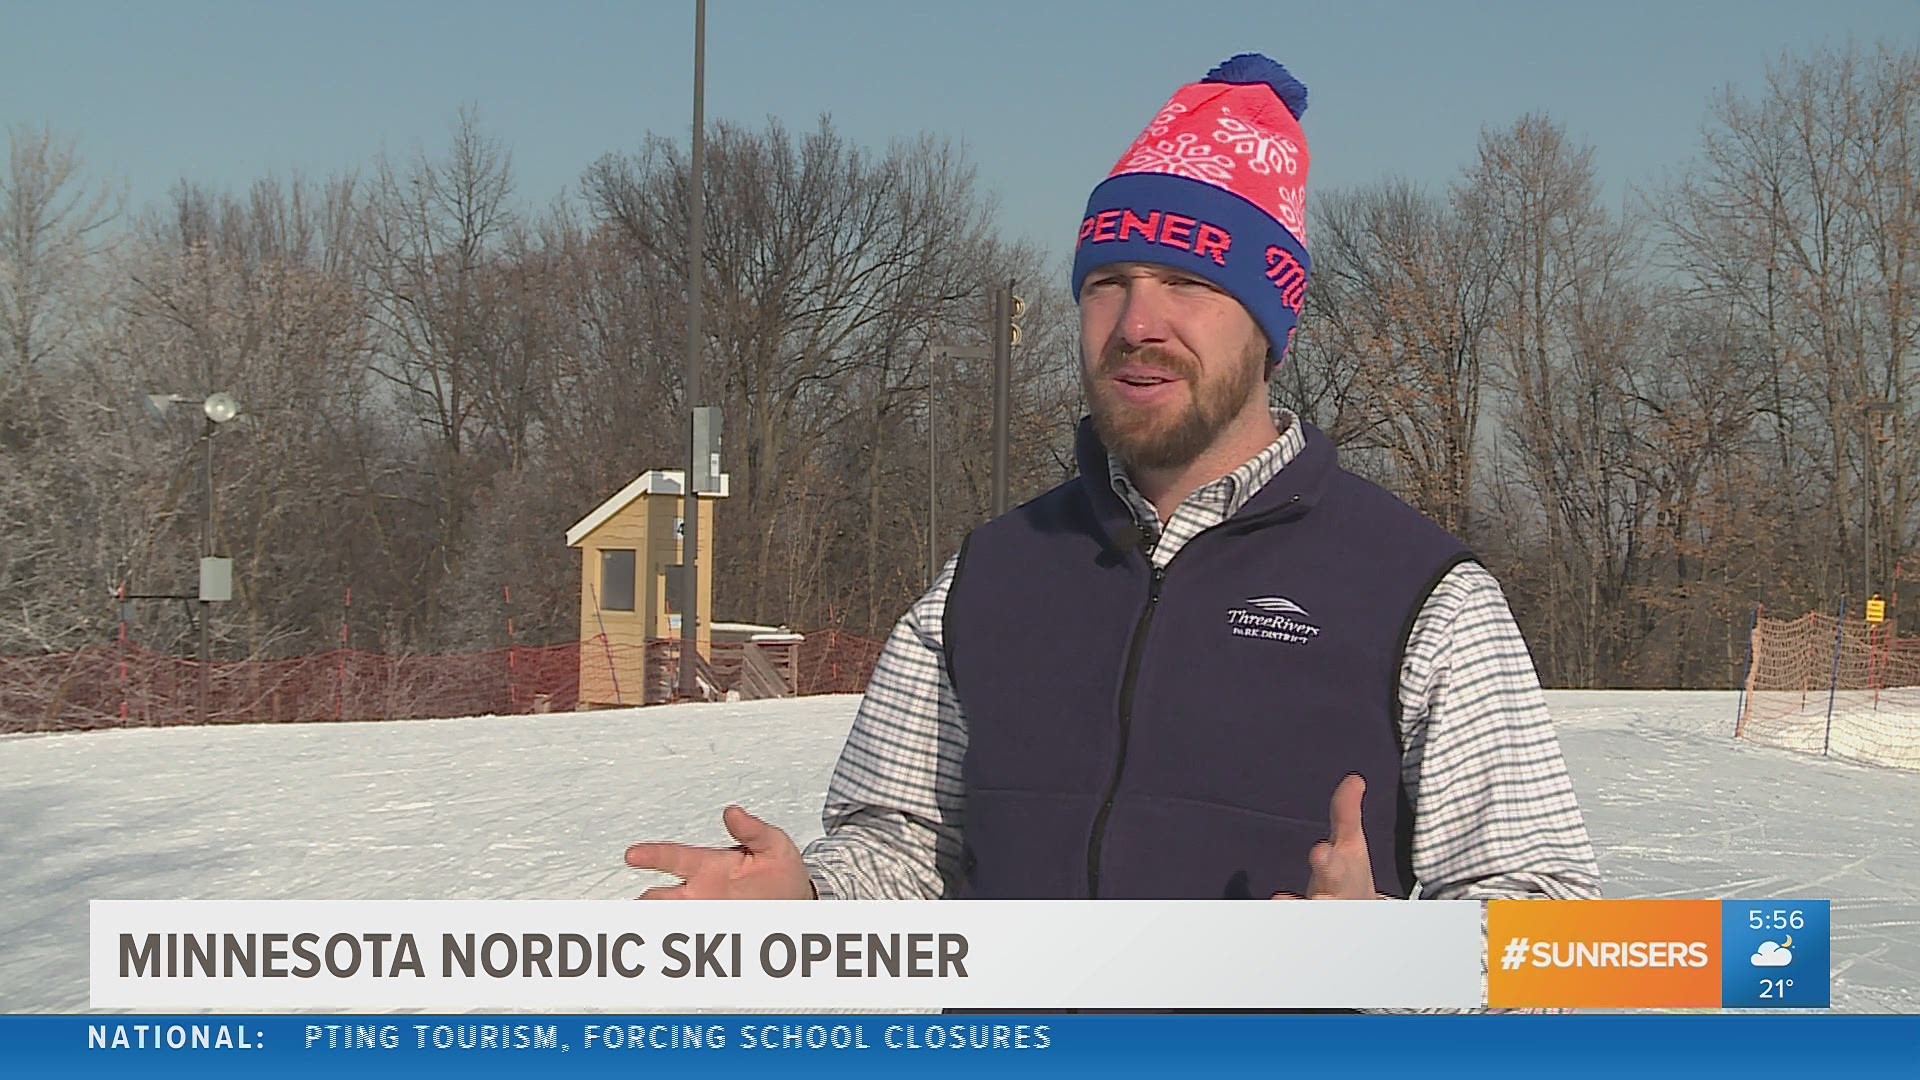 Celebrate winter at The Minnesota Nordic Ski Opener on Saturday Dec. 9.